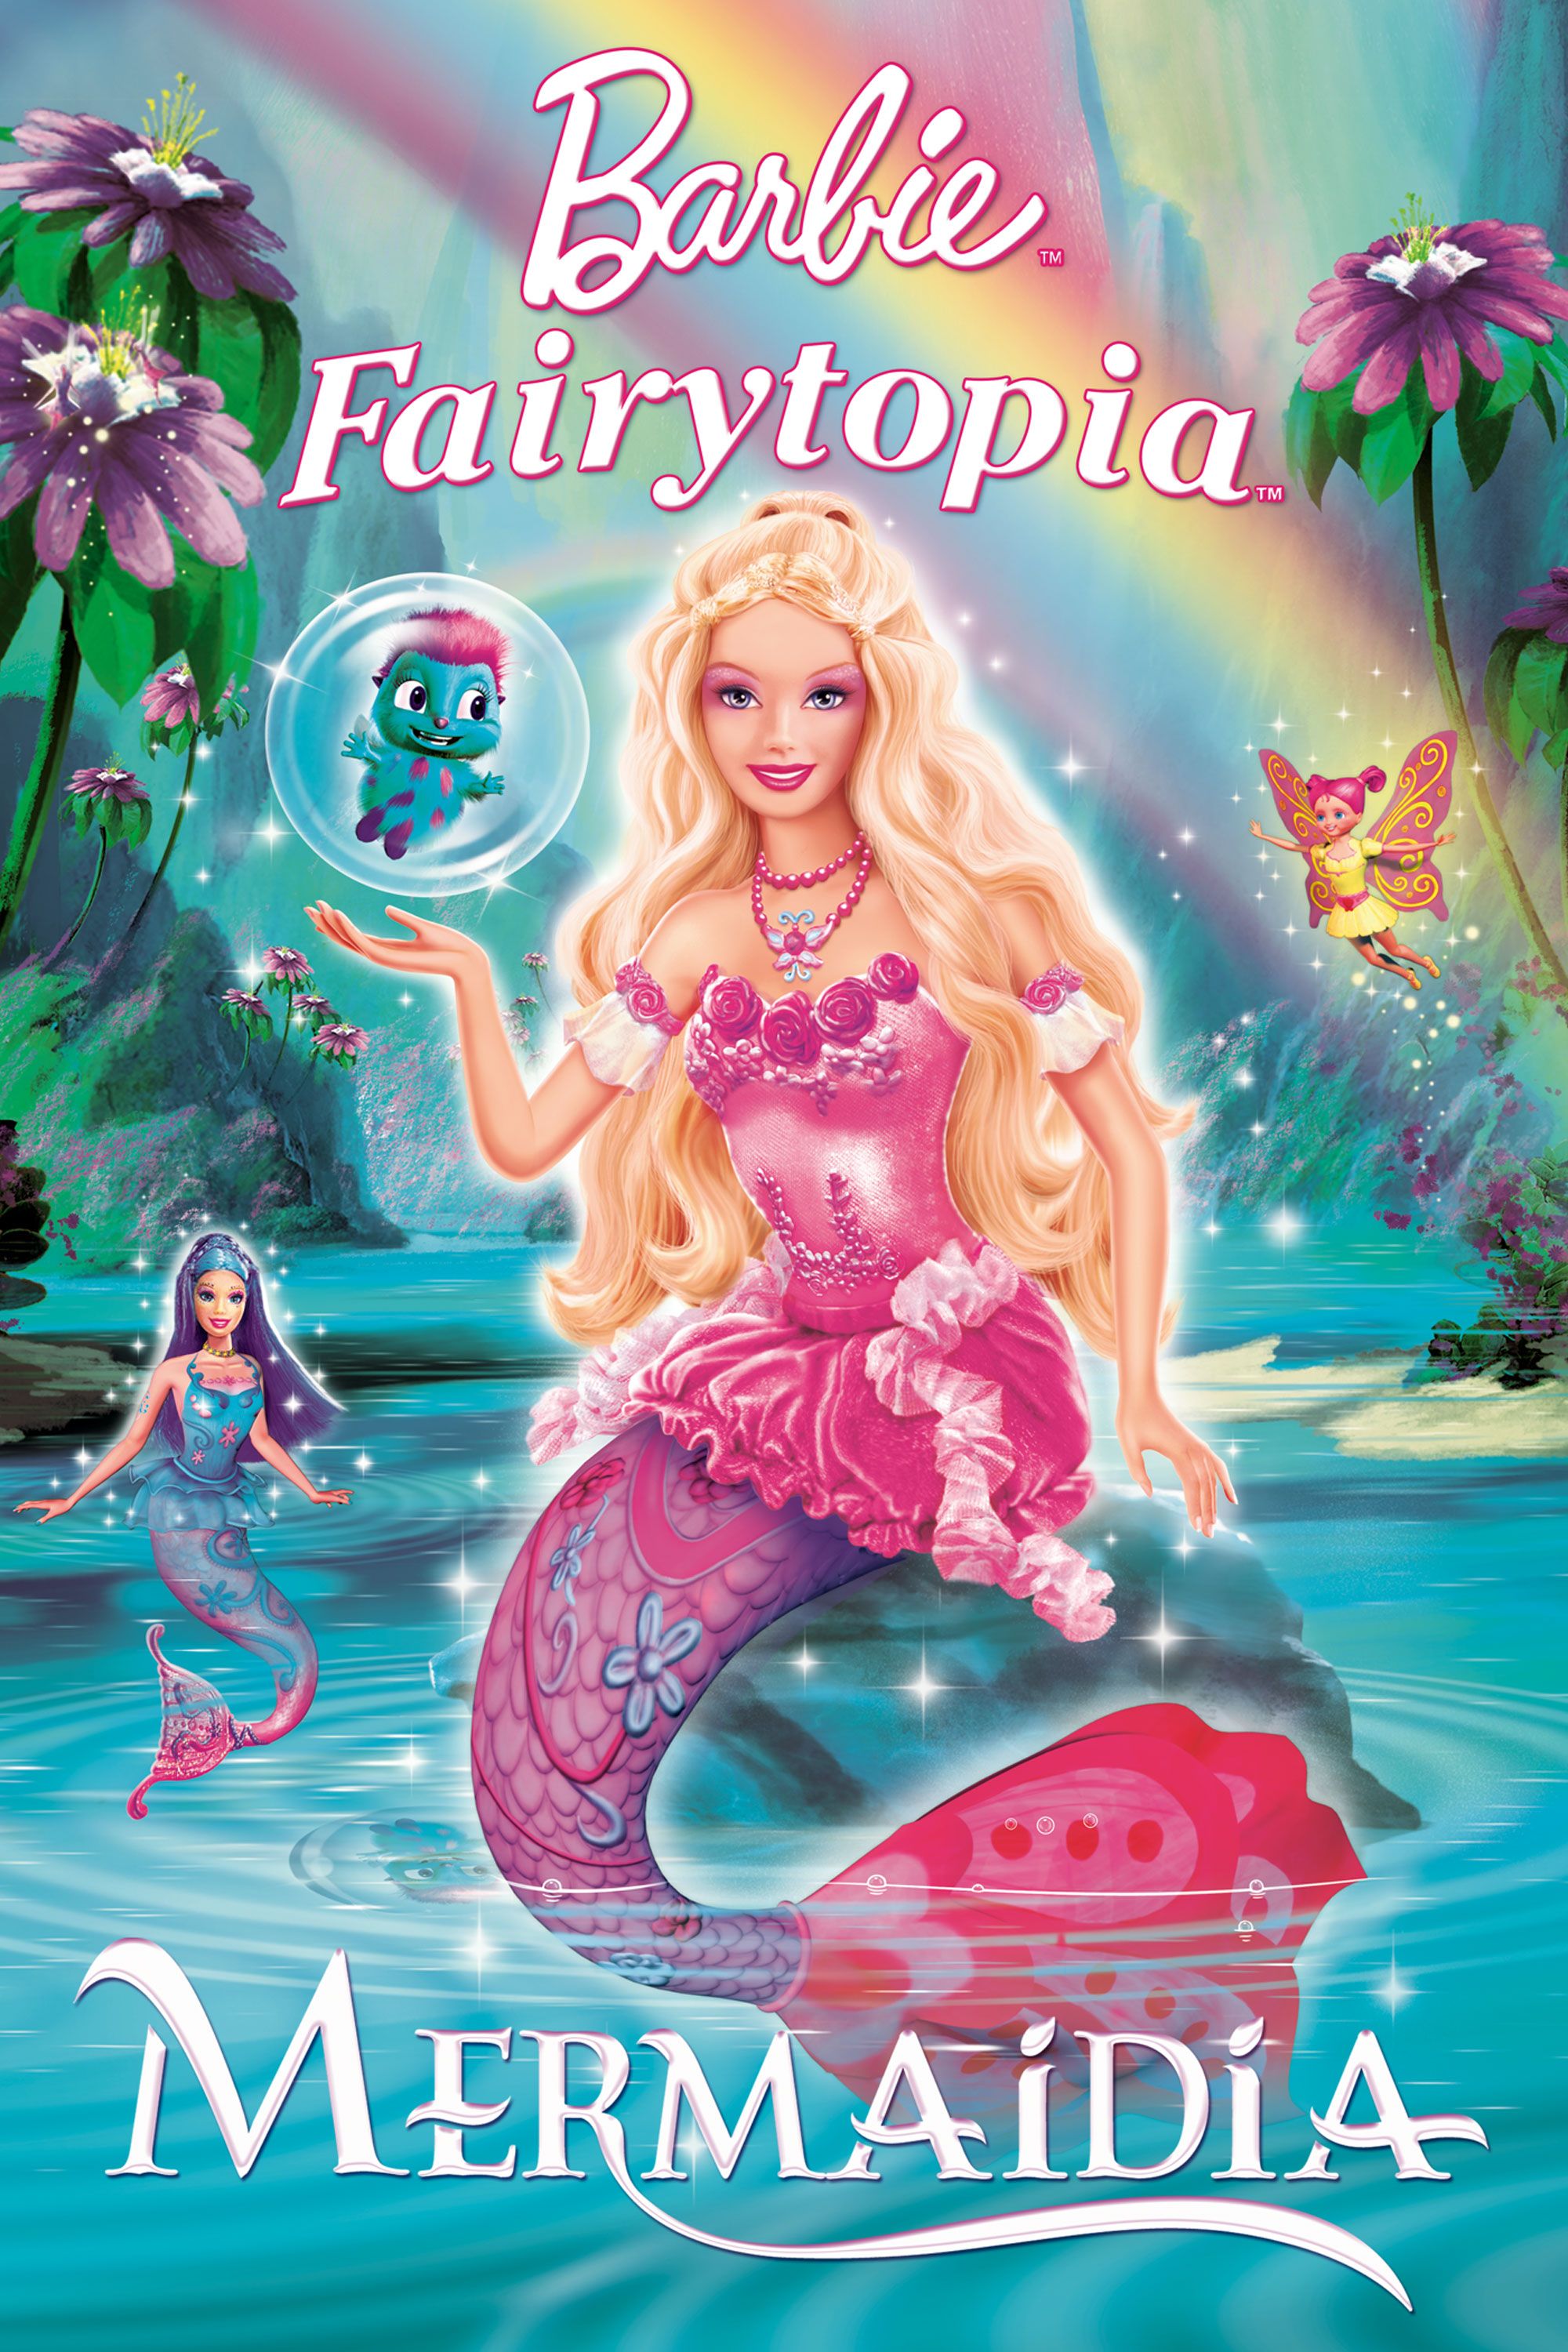 Barbie Fairytopia: Mermaidia | Full 